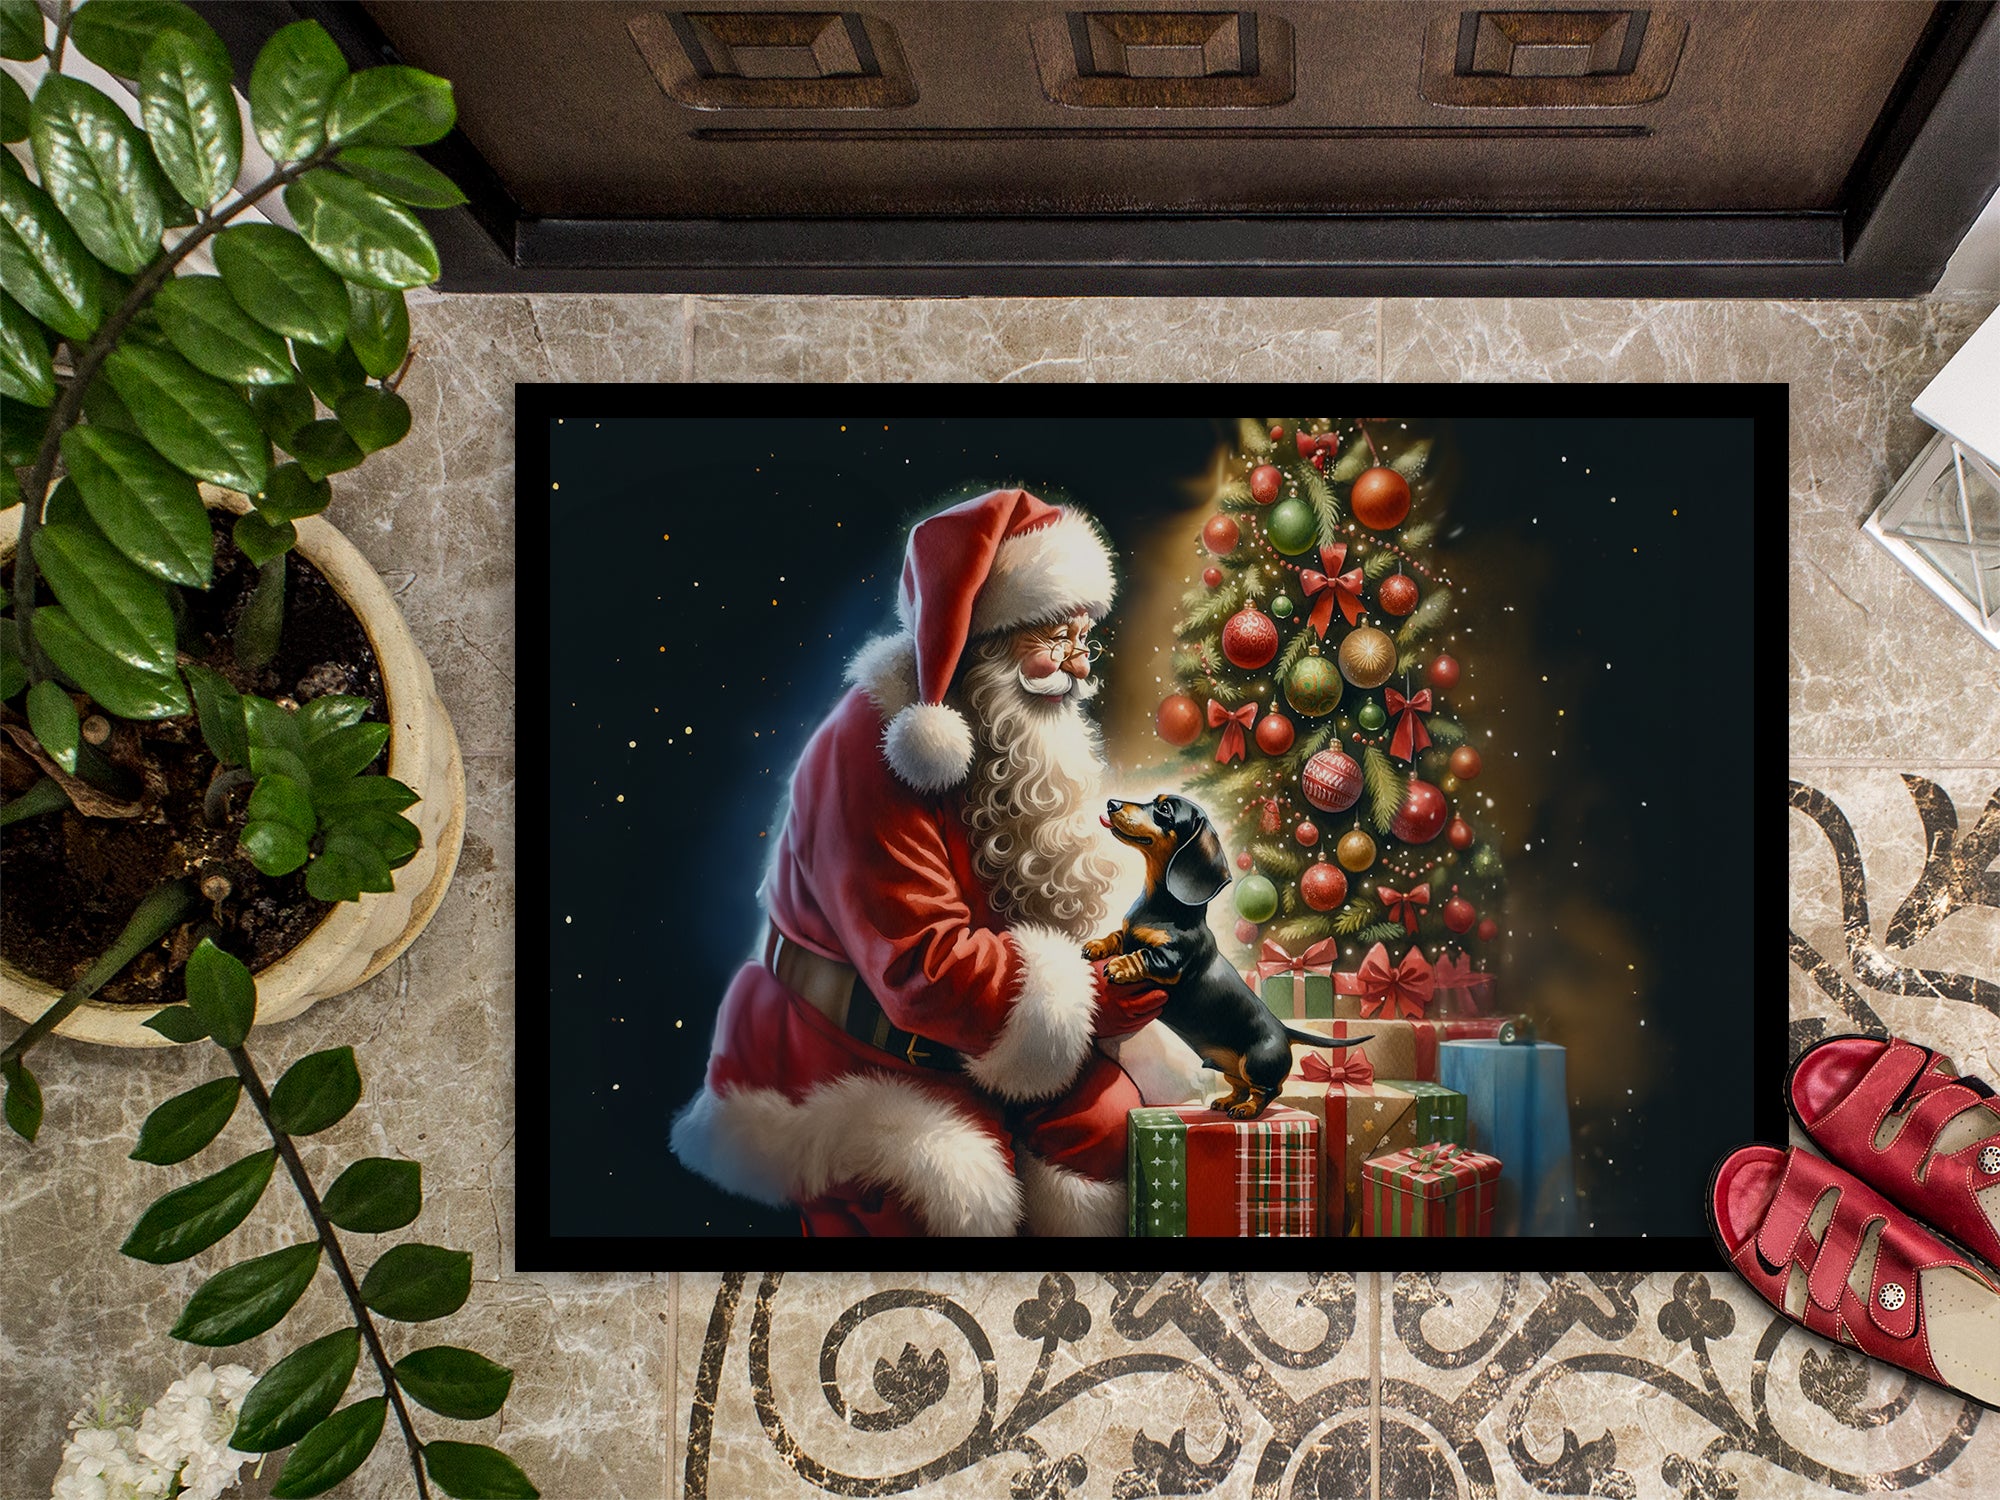 Dachshund and Santa Claus Doormat